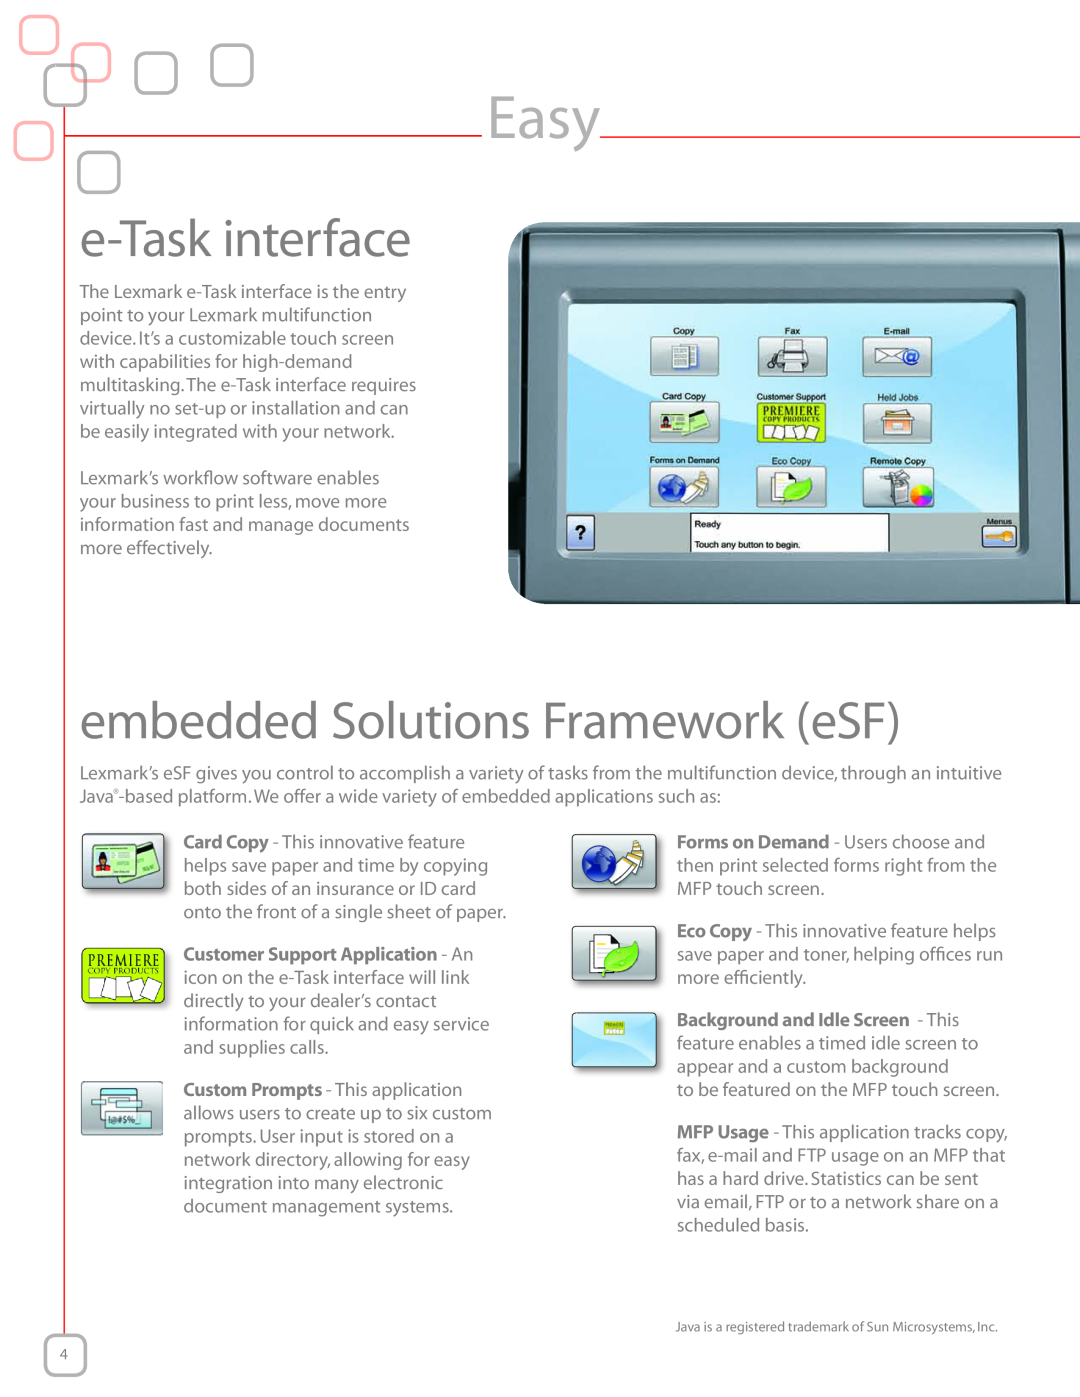 Lexmark XS734de, XS736de, High performance color MFP manual Easy, e-Task interface, embedded Solutions Framework eSF 